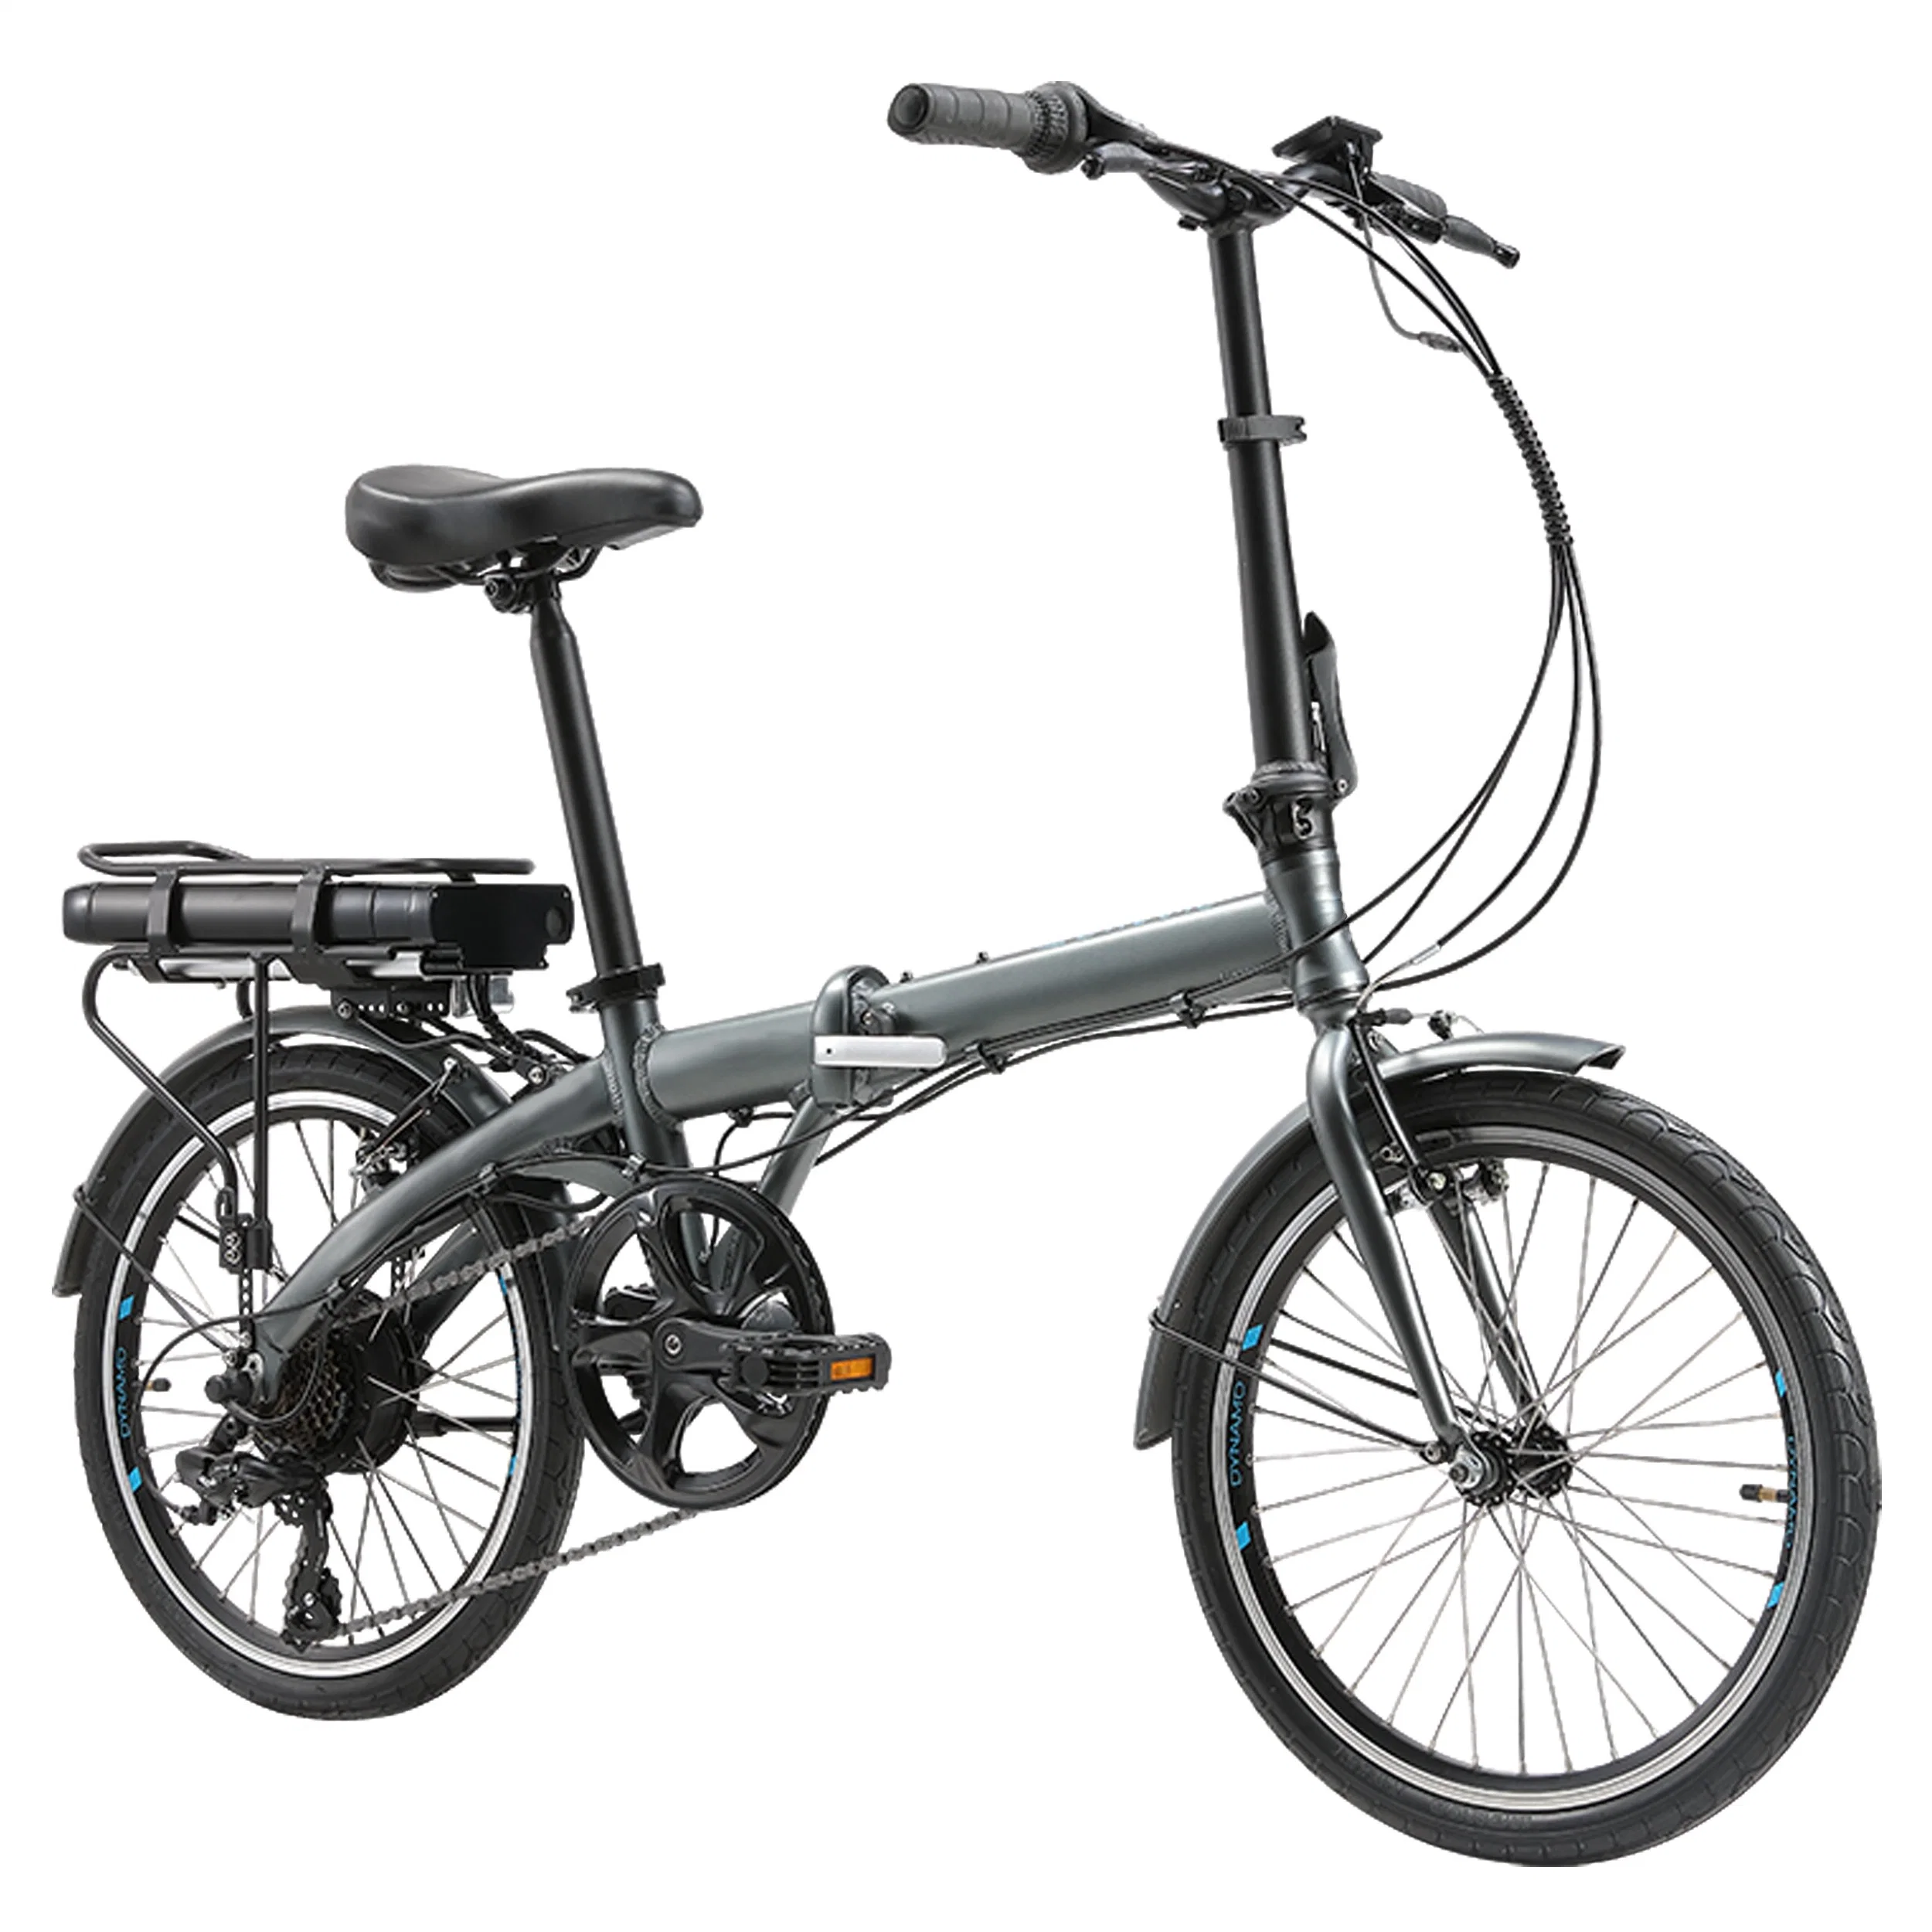 Mini bicicleta eléctrica plegable Ciudad E Scooter bicicleta plegable Adulto Scooter eléctrico